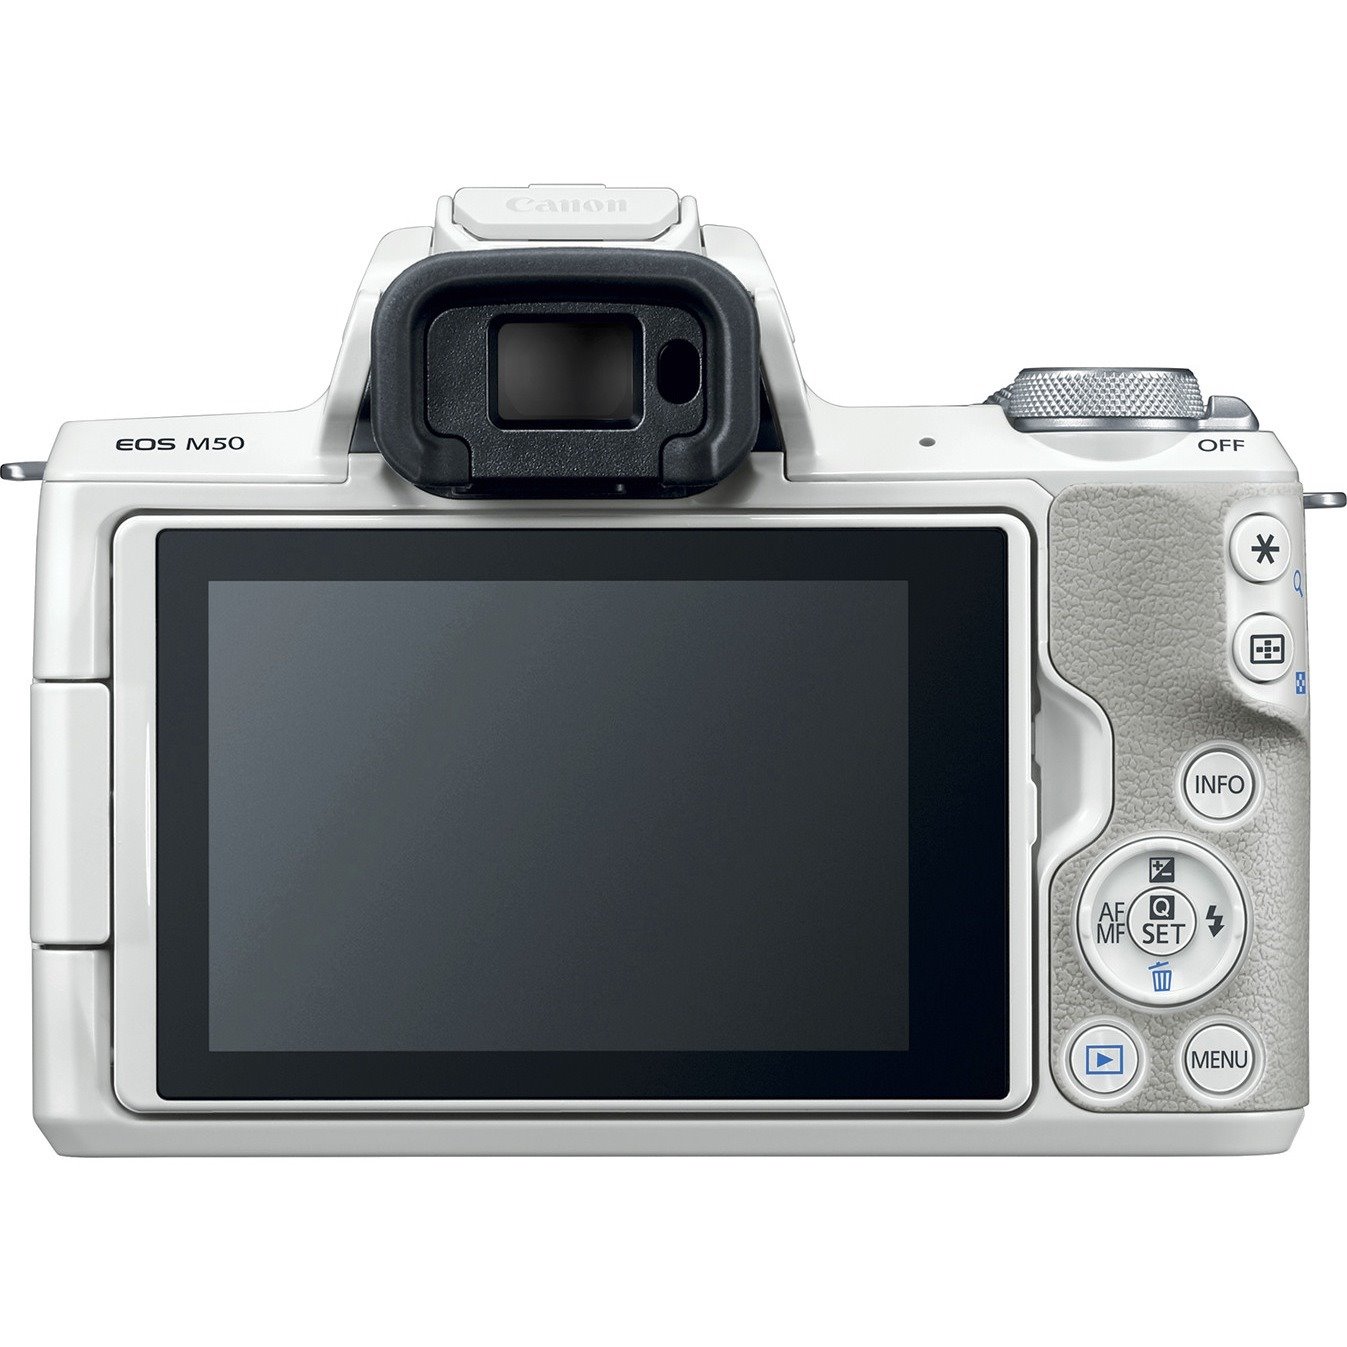 Canon EOS M50 24.1 Megapixel Mirrorless Camera with Lens - 0.59" - 1.77" - White